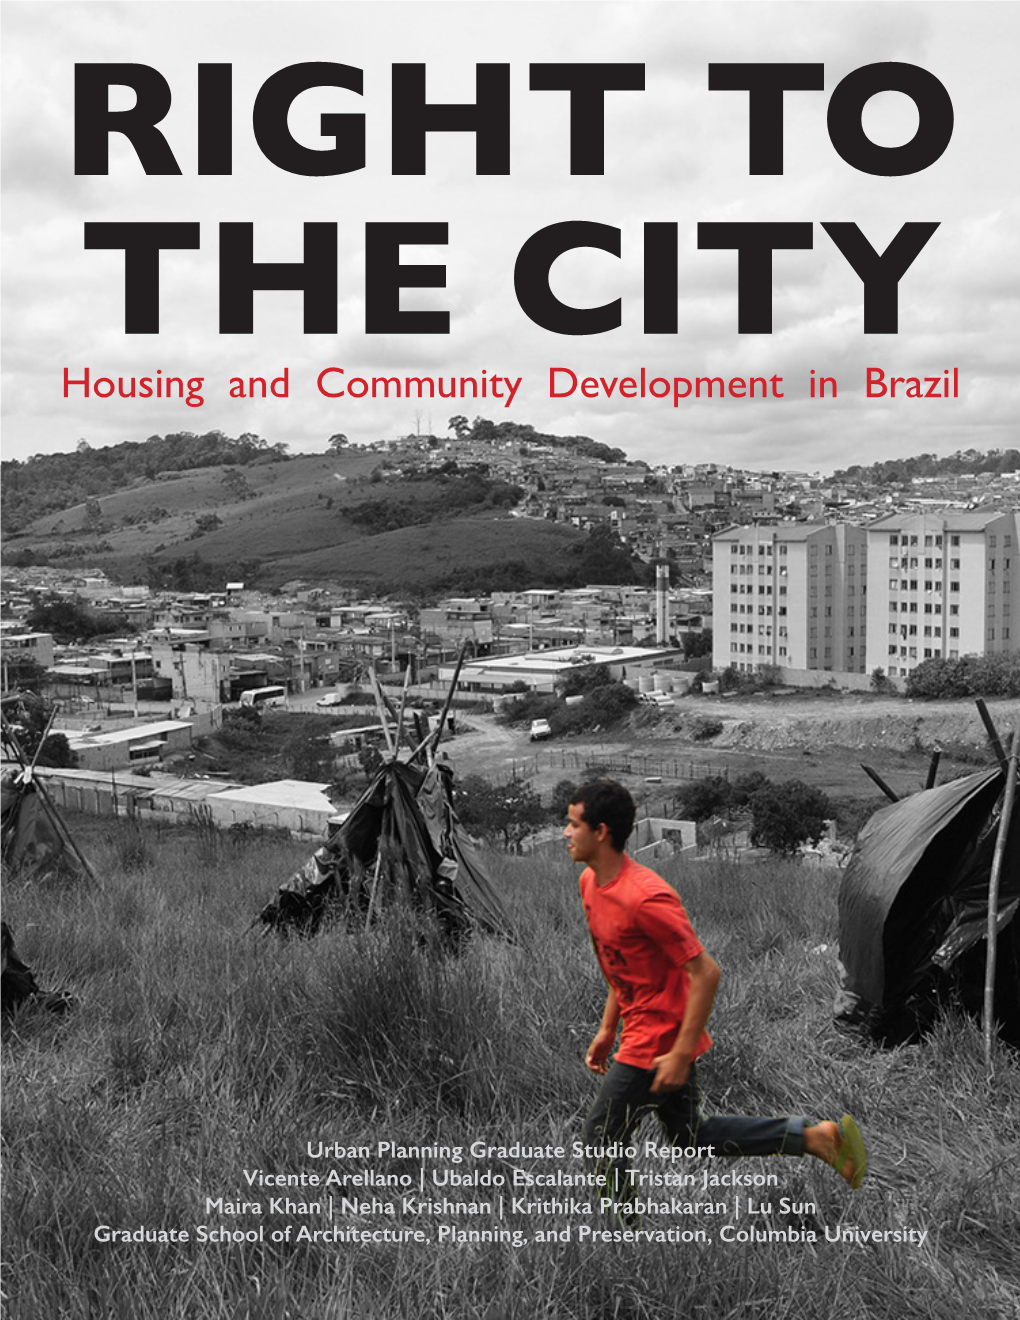 Housing and Community Development in Brazil